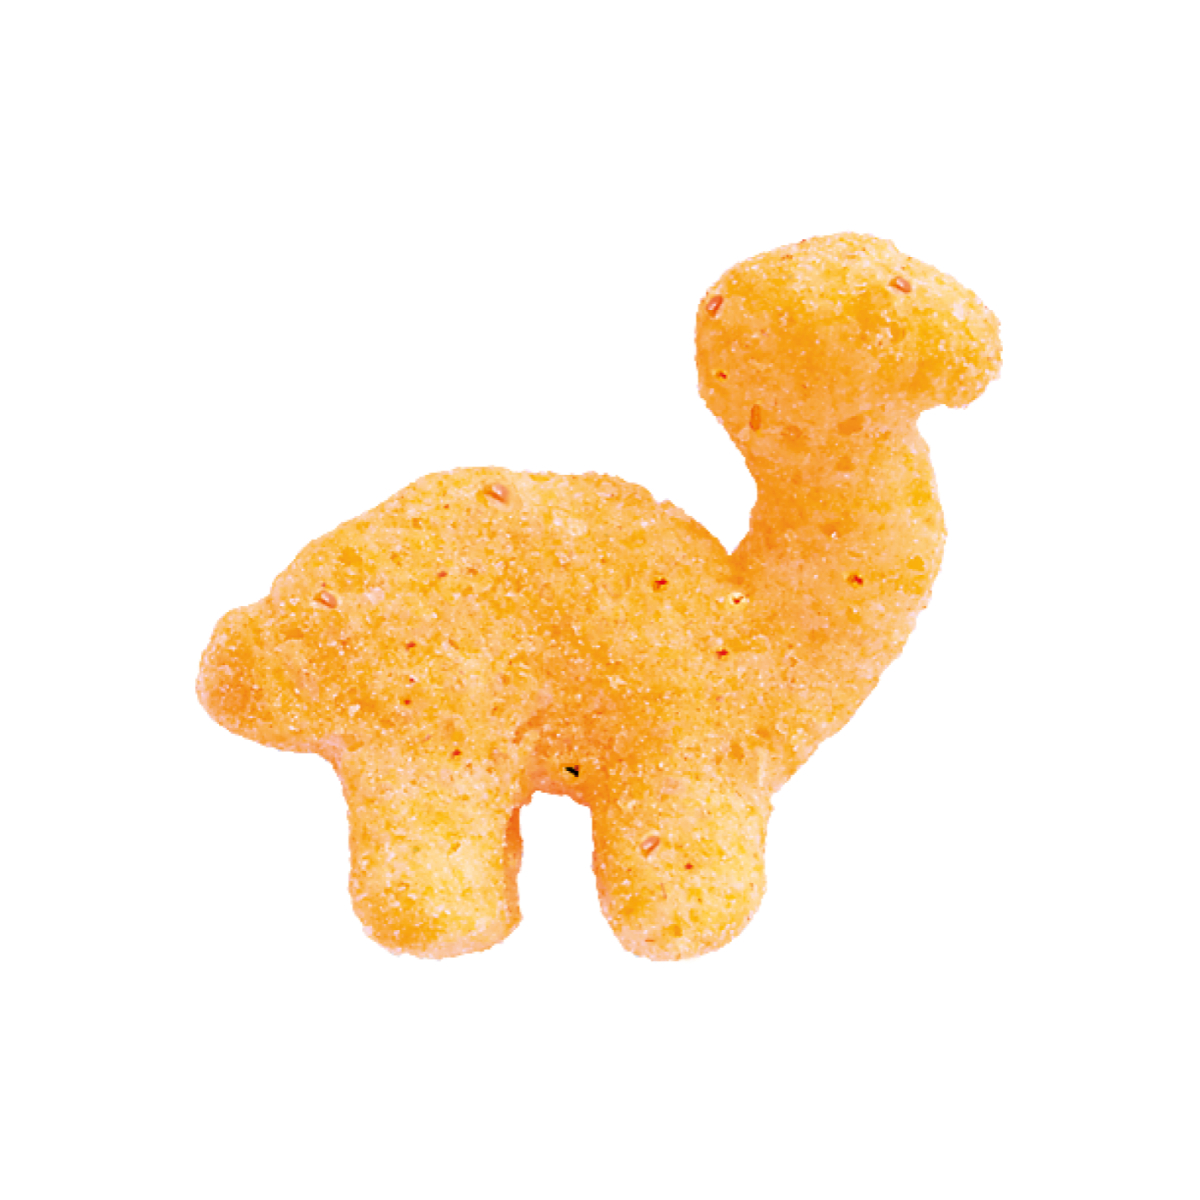 McLLOYD'S BioSaurus Organic Baked Corn Snack for Kids "Ketchup" Multipack 4 x 15g